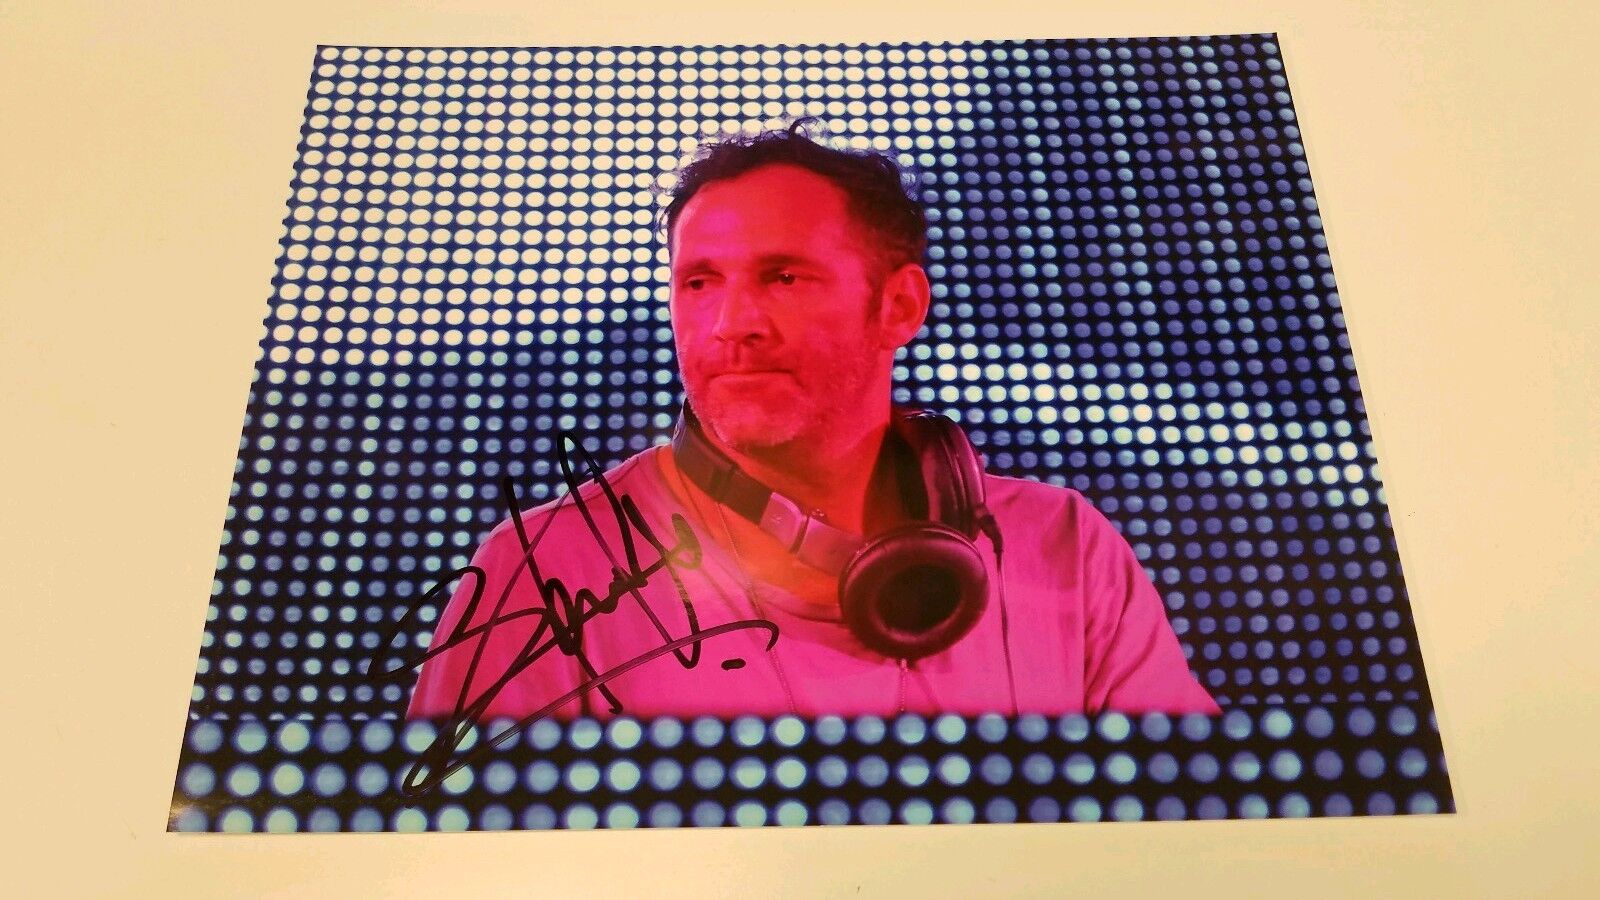 DJ Steve Lawler Signed Photo 8x10 COA Autographed FREE S&H 